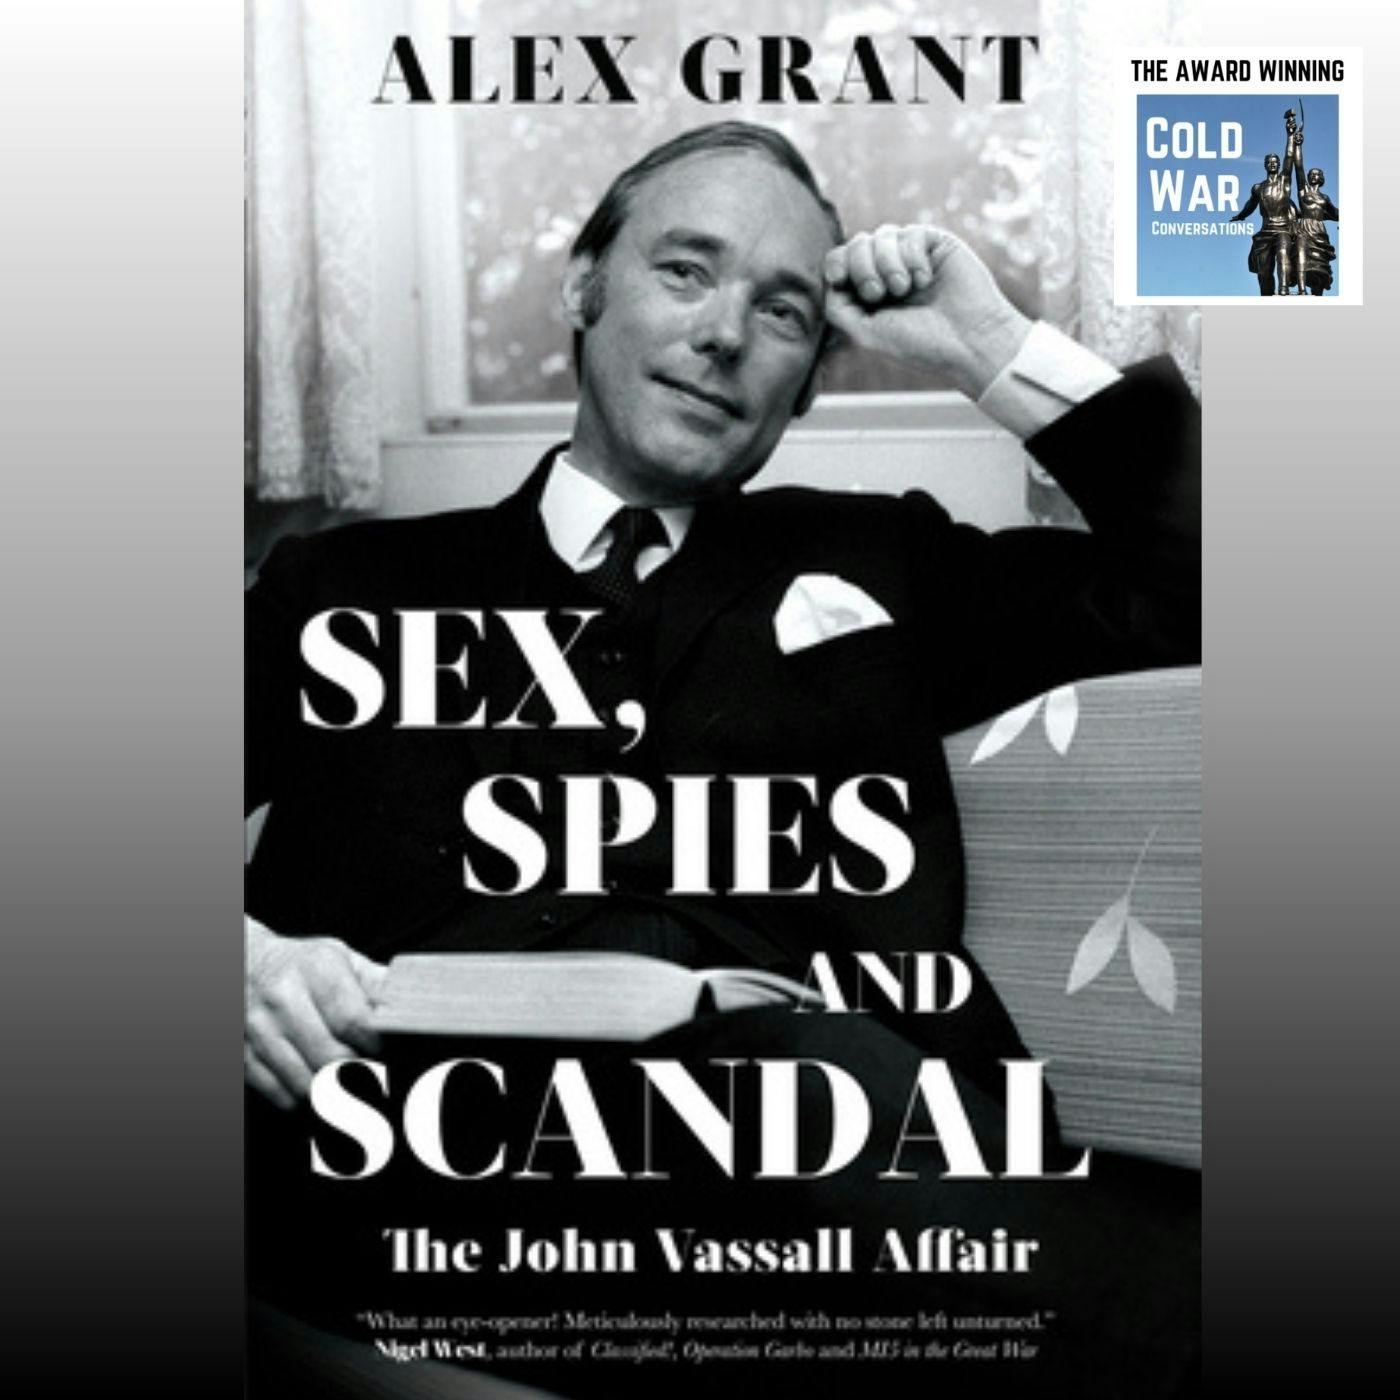 Sex, spies and scandal : the John Vassall affair (336)